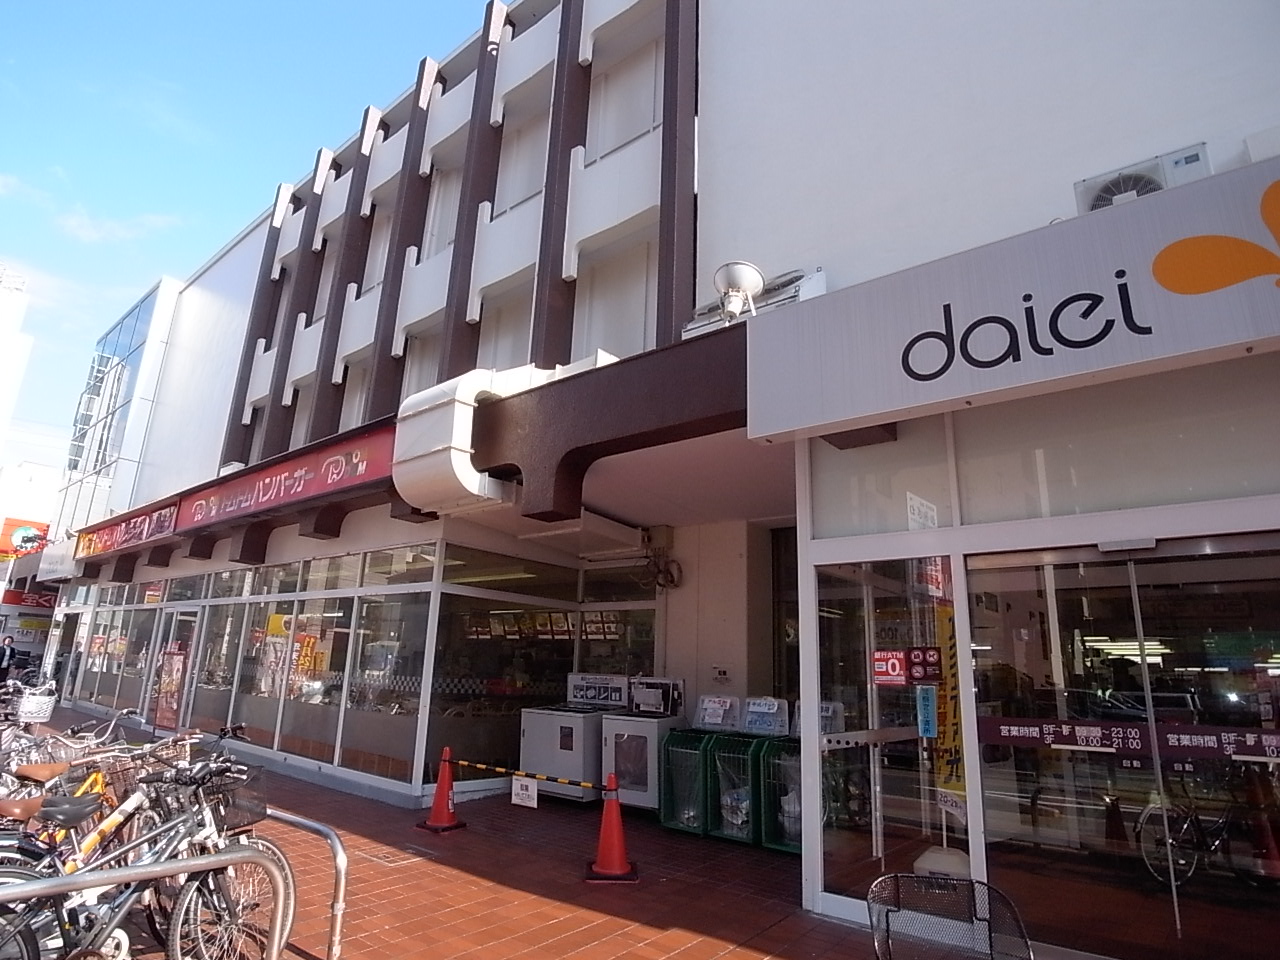 Shopping centre. 847m to Daiei Imaike store (shopping center)